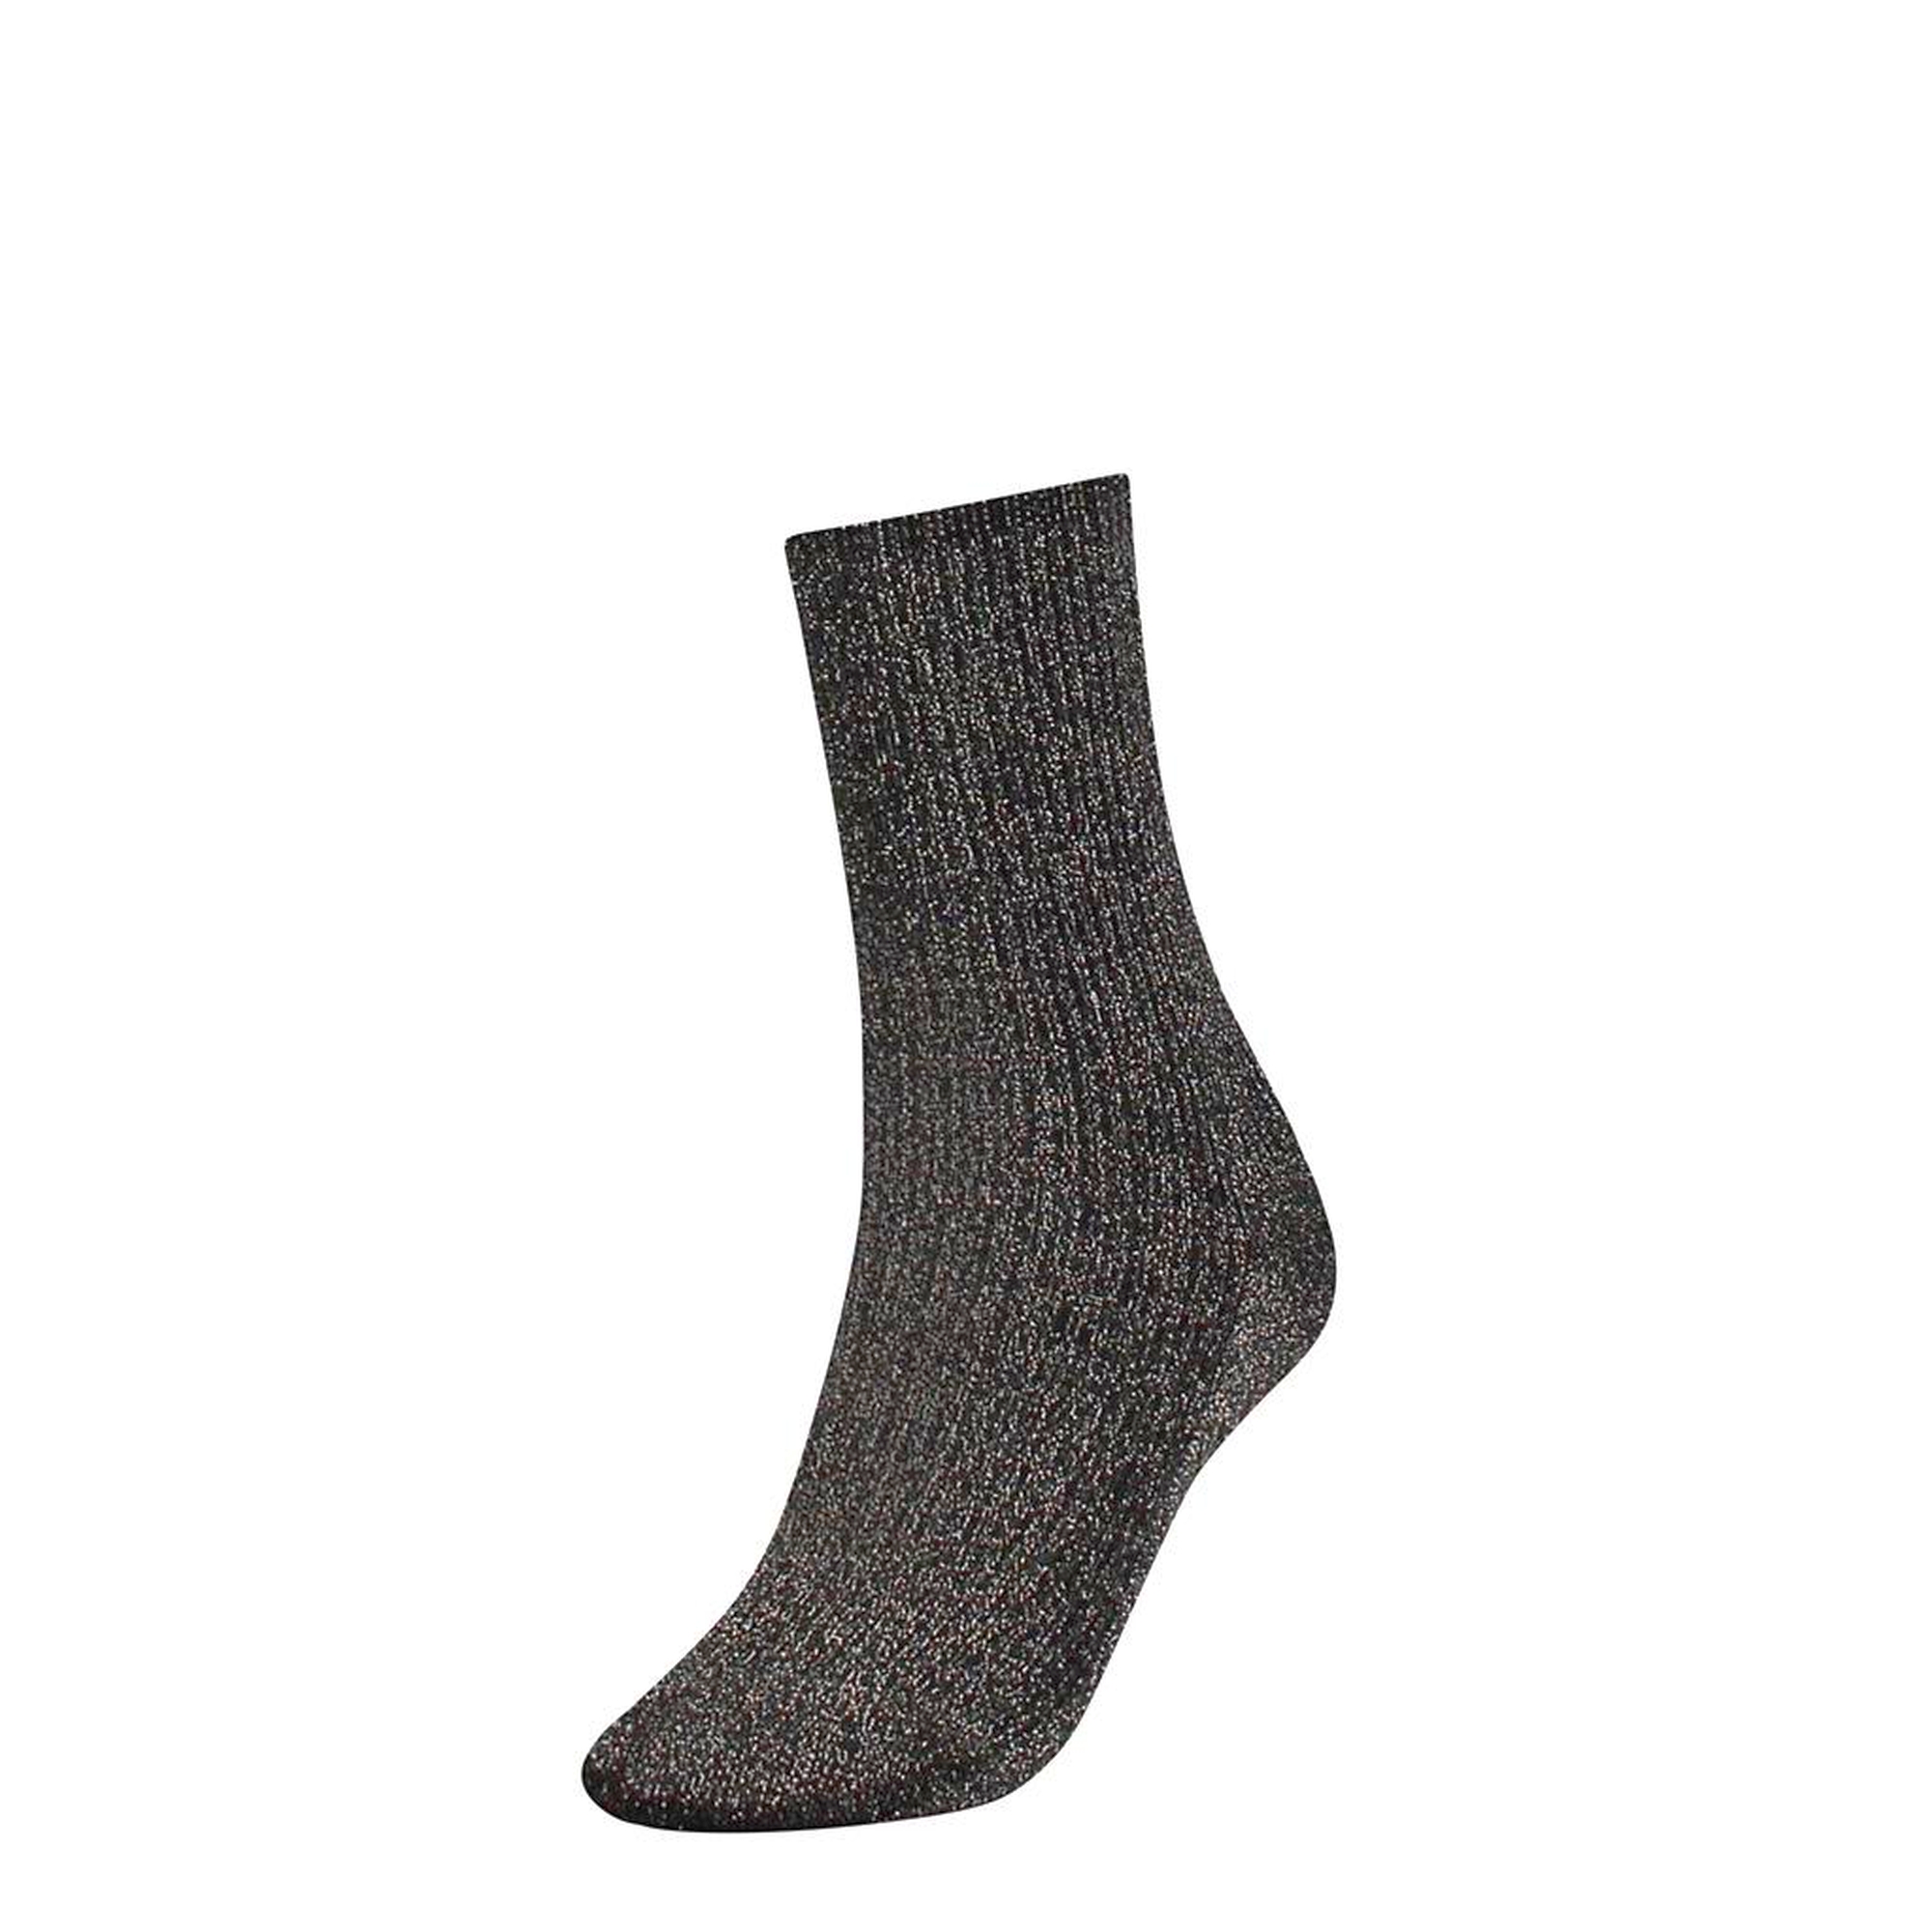 Tommy Hilfiger socks 383016001 200 Black